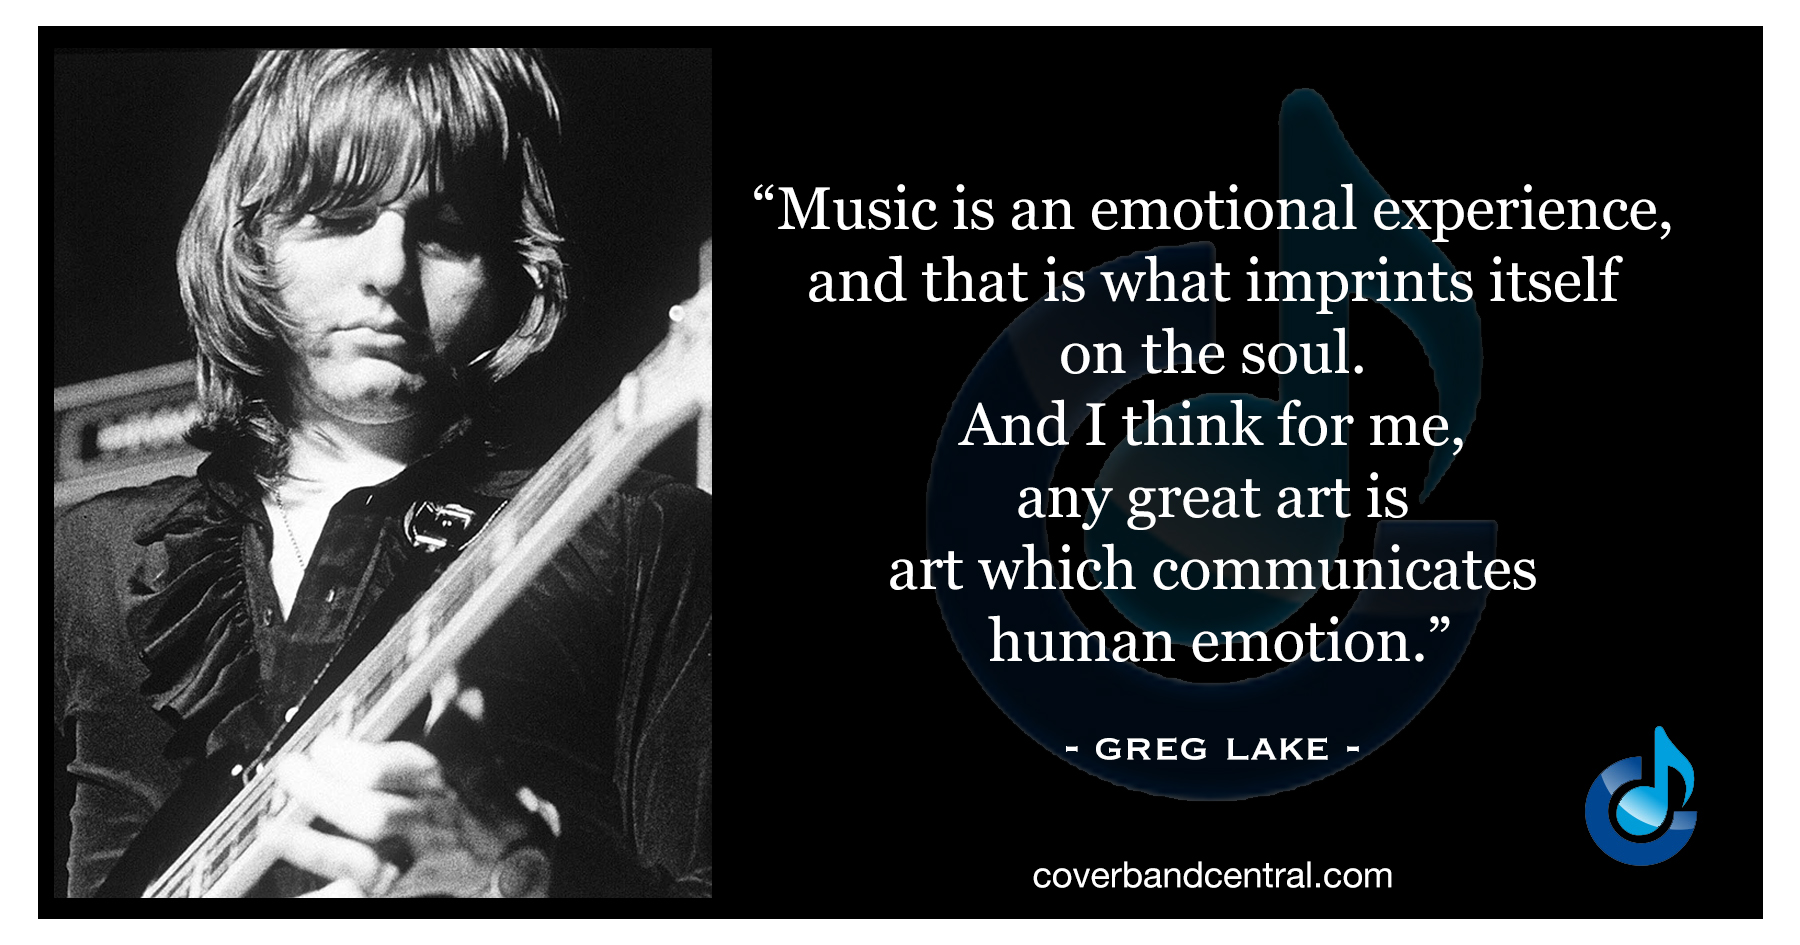 Greg Lake quote